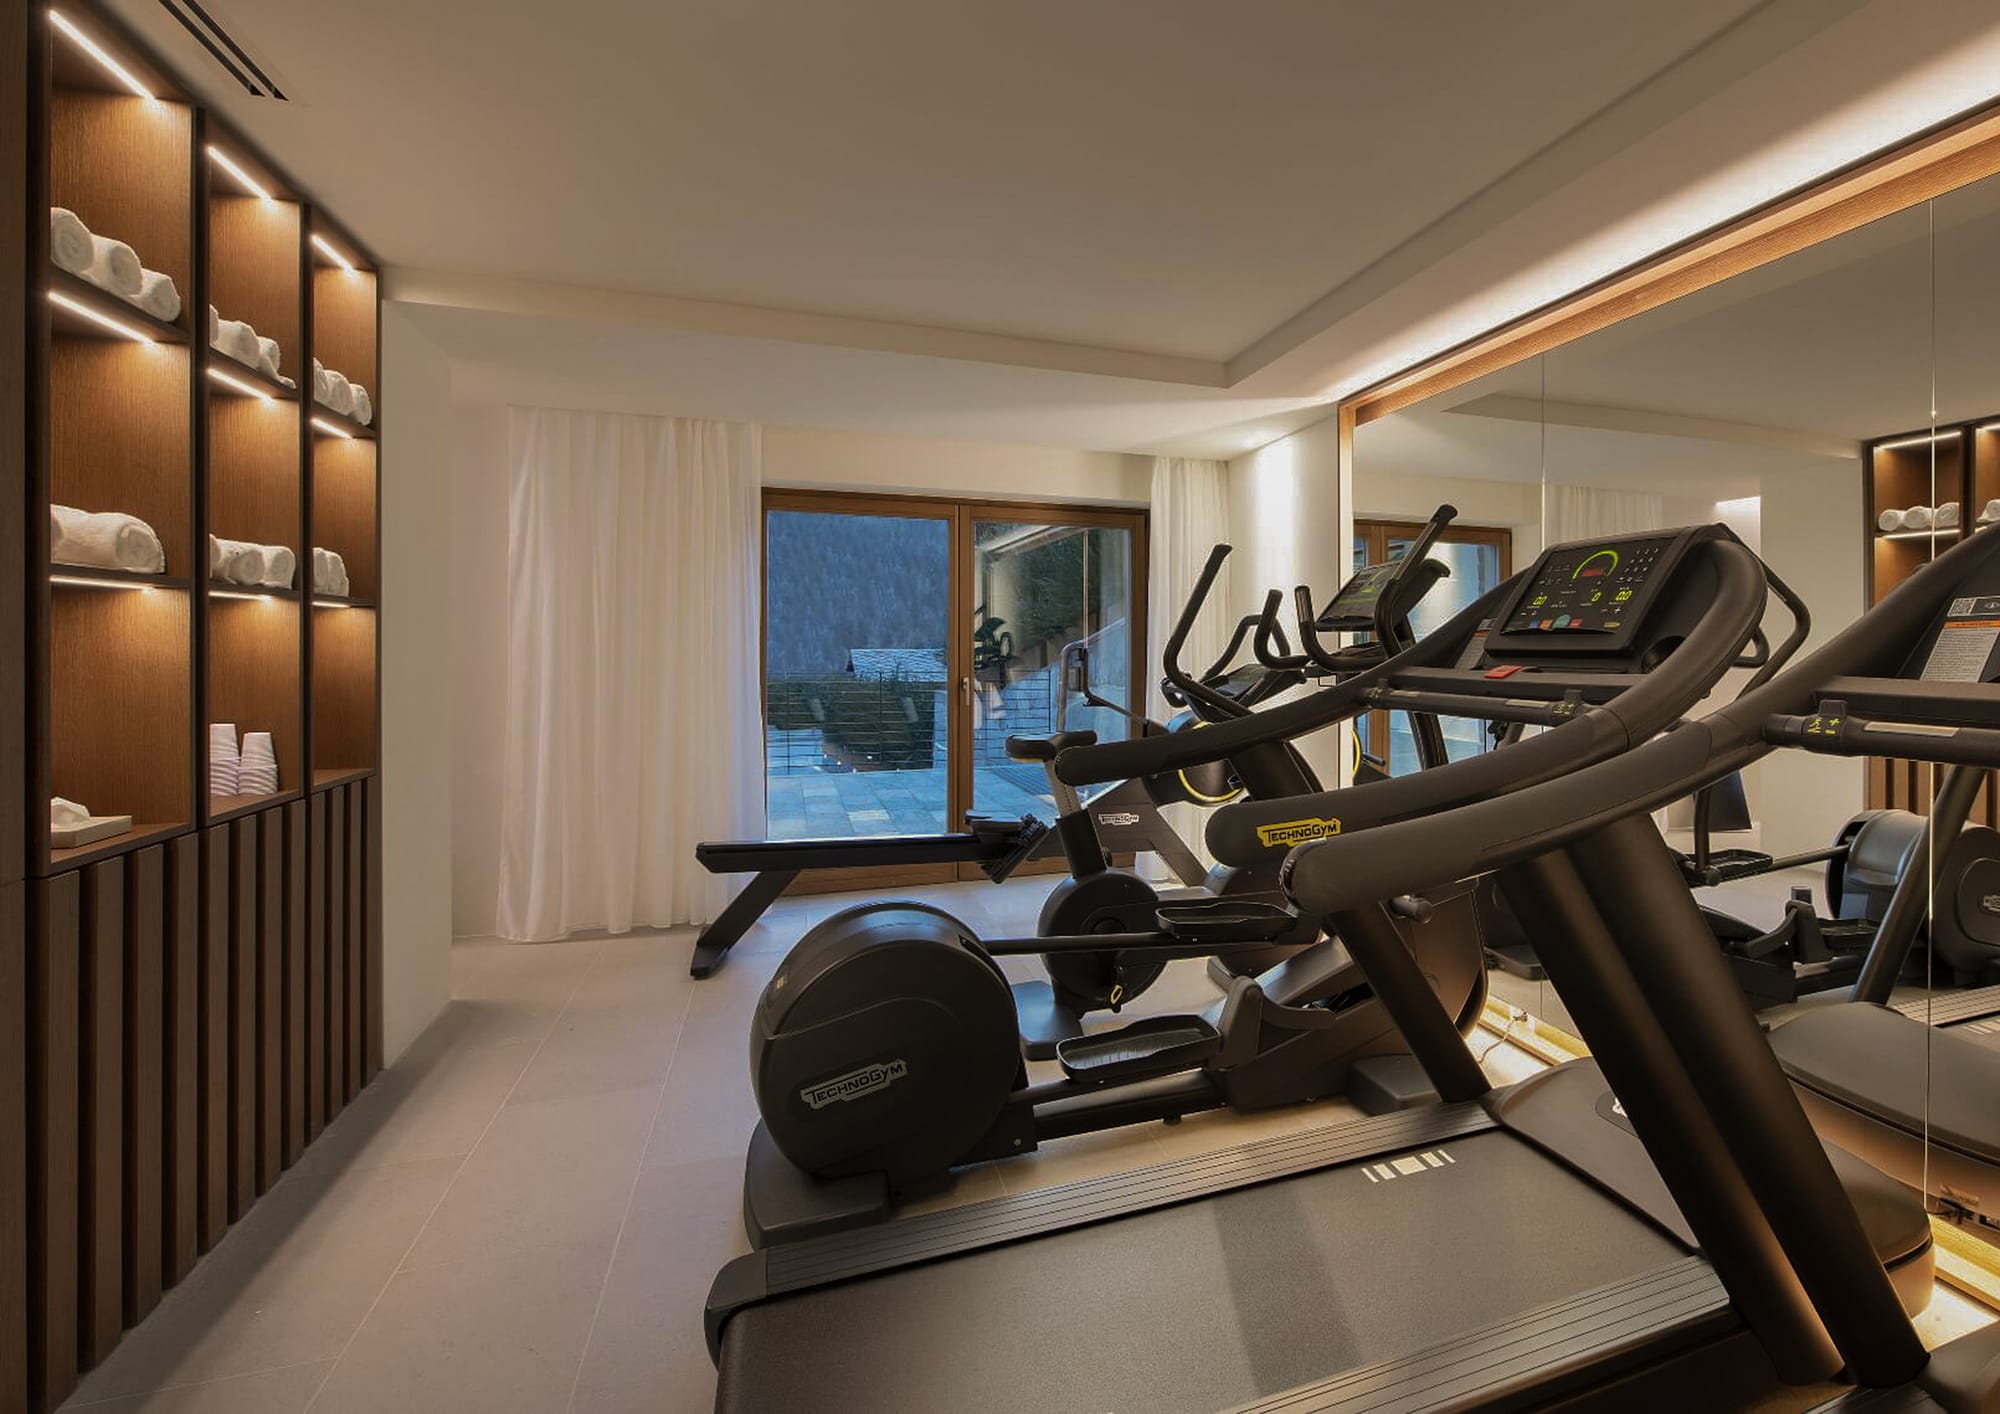 Le Massif Hotel & Spa, sala fitness con macchine cardio